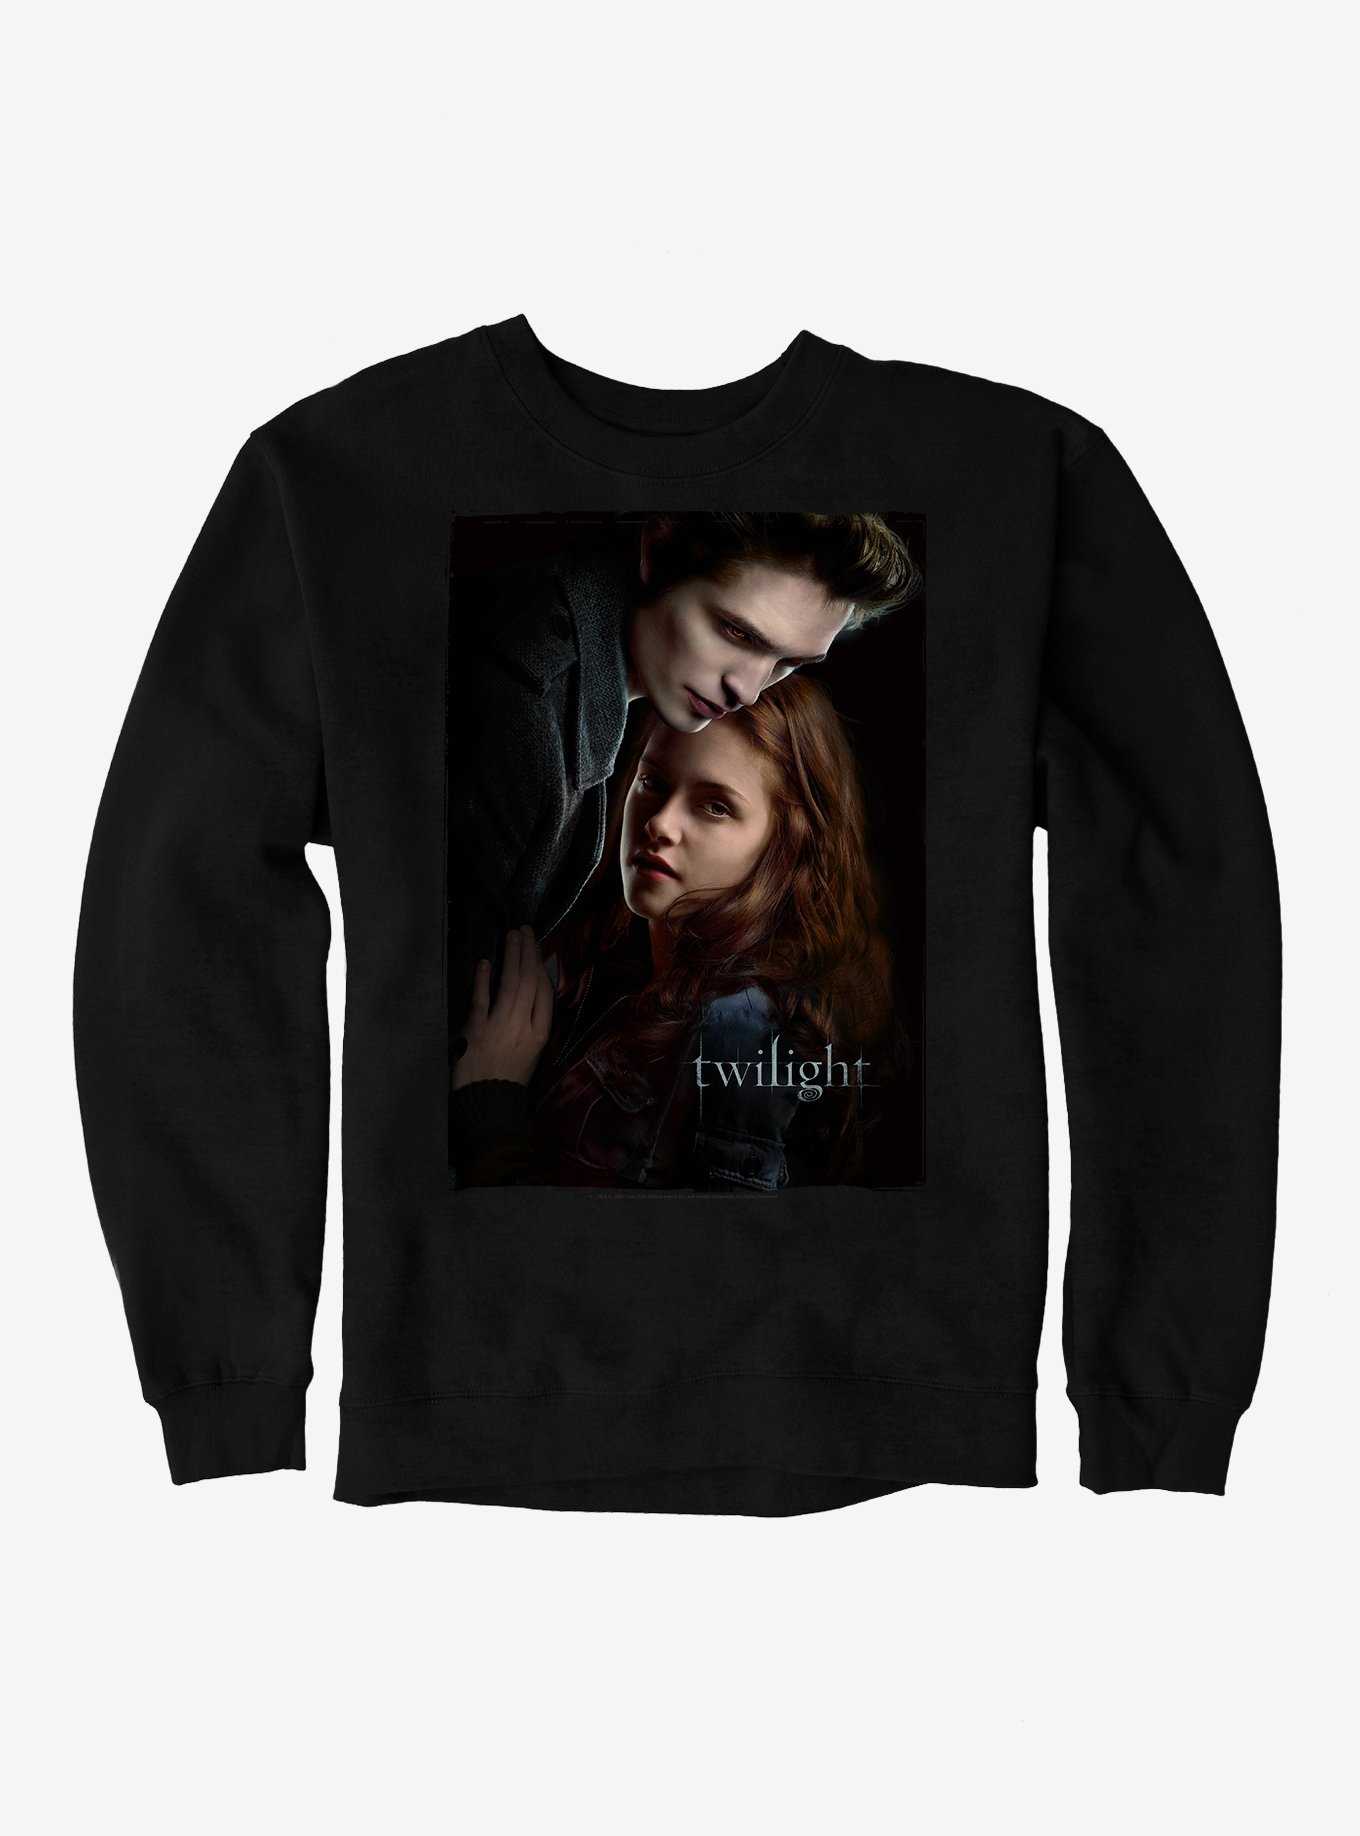 The Twilight Saga Ripped Photo Boyfriend Fit Girls T-Shirt